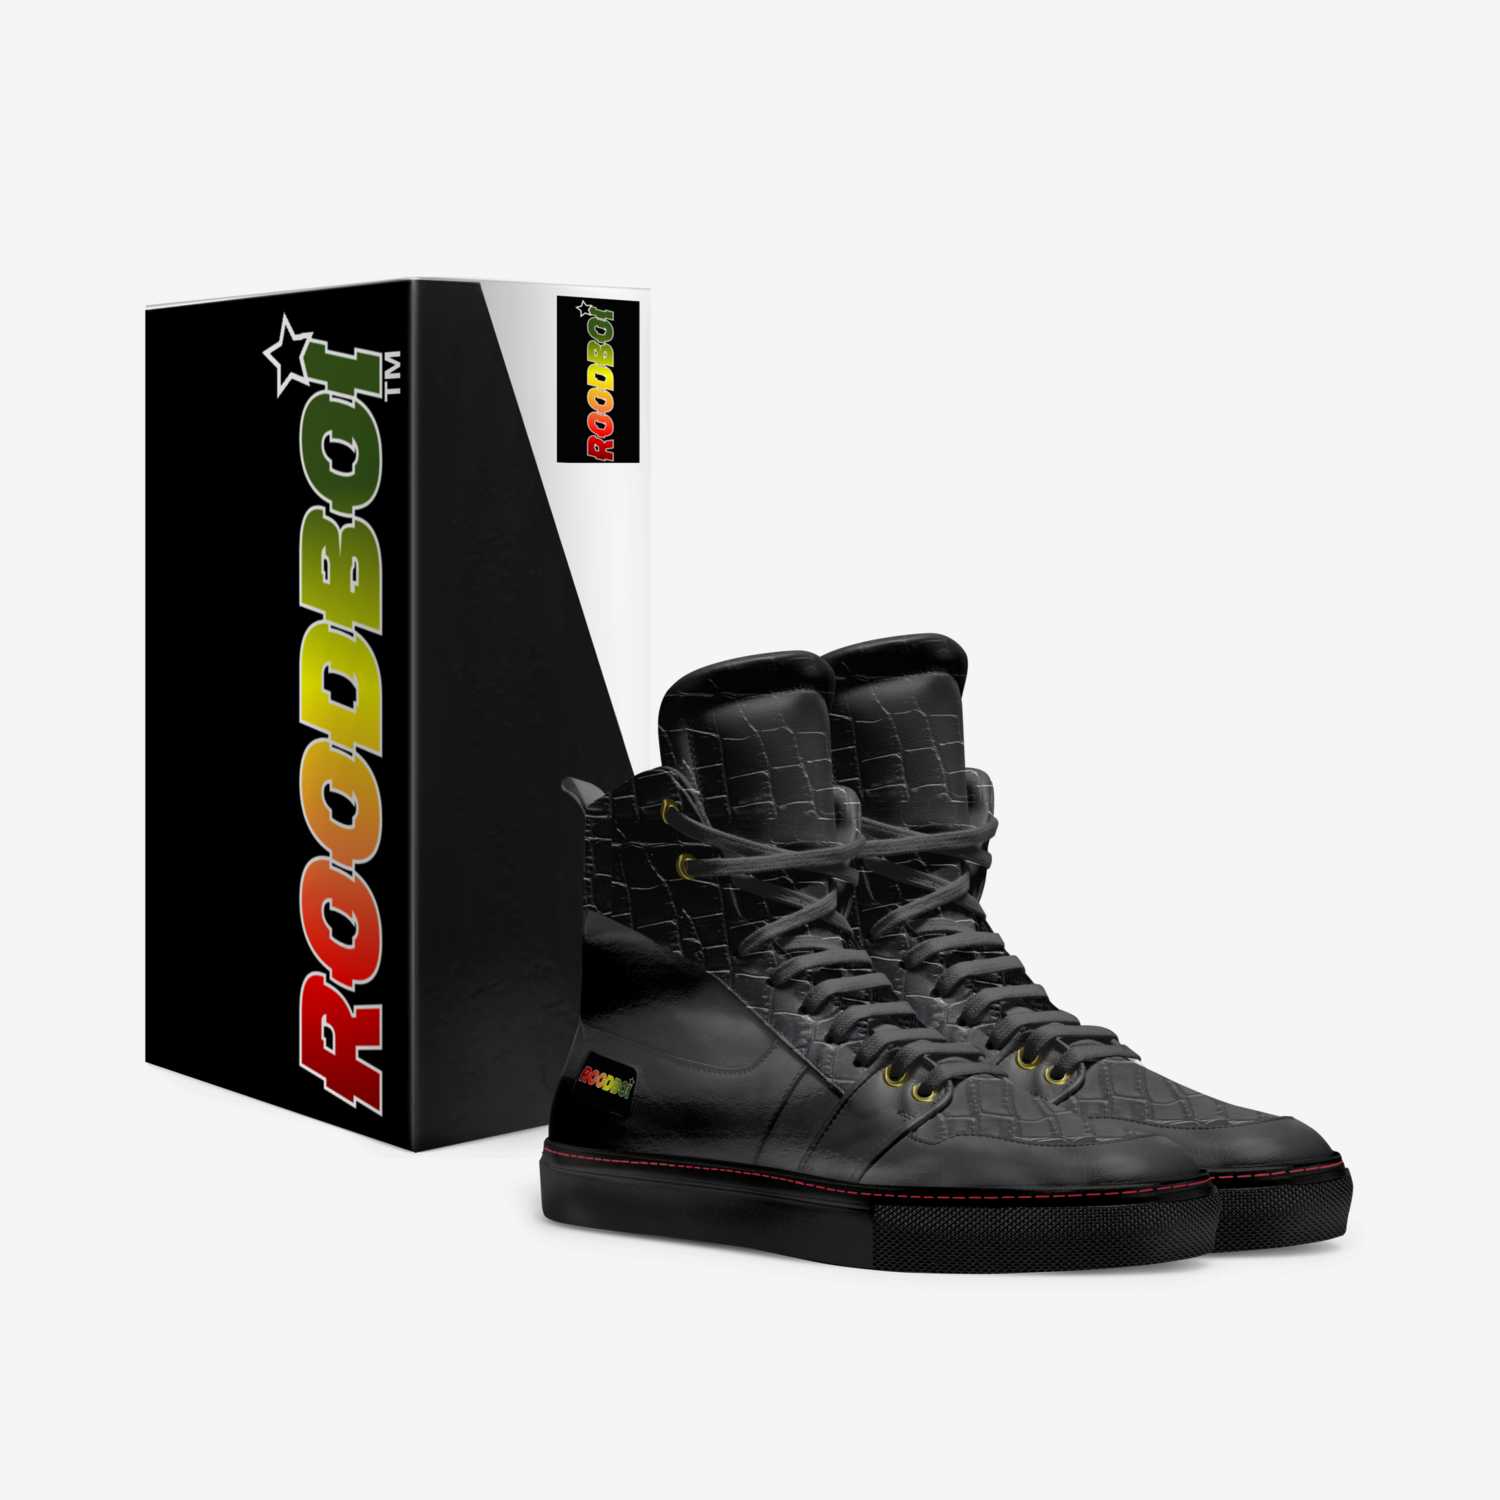 DARGON custom made in Italy shoes by Shango Don Ragga | Box view